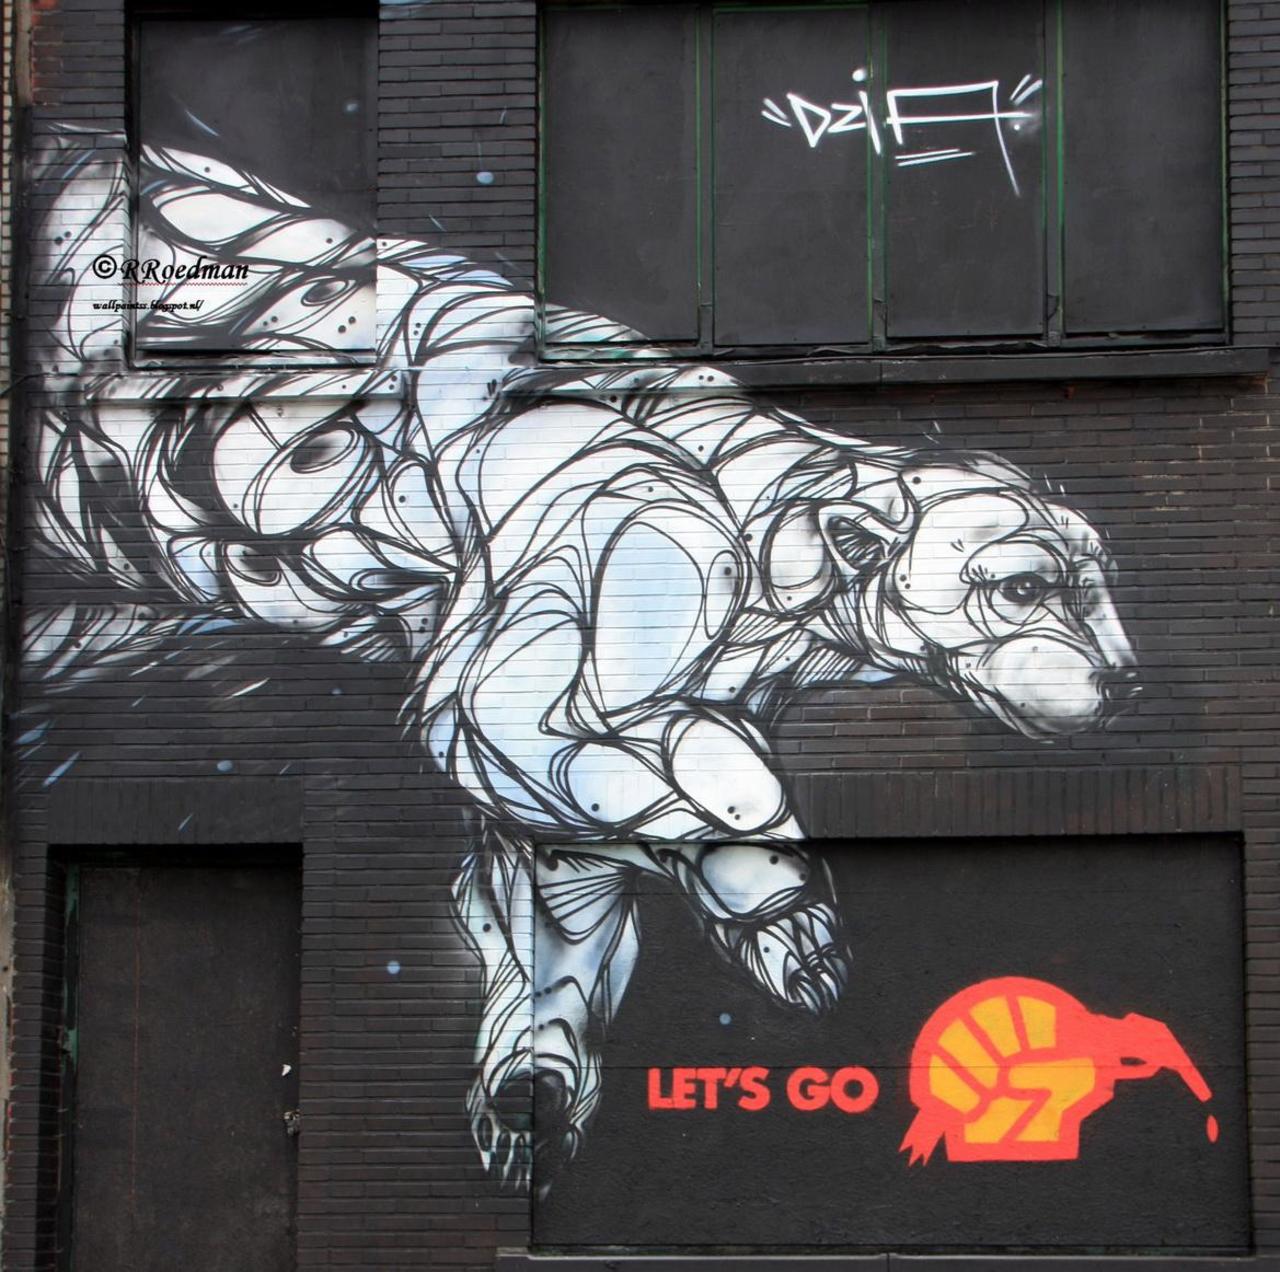 #streetart #graffiti #mural Polar bear in #Berchem #Antwerpen from #Dzia,2 pics at http://wallpaintss.blogspot.nl http://t.co/Yd06IPLehq